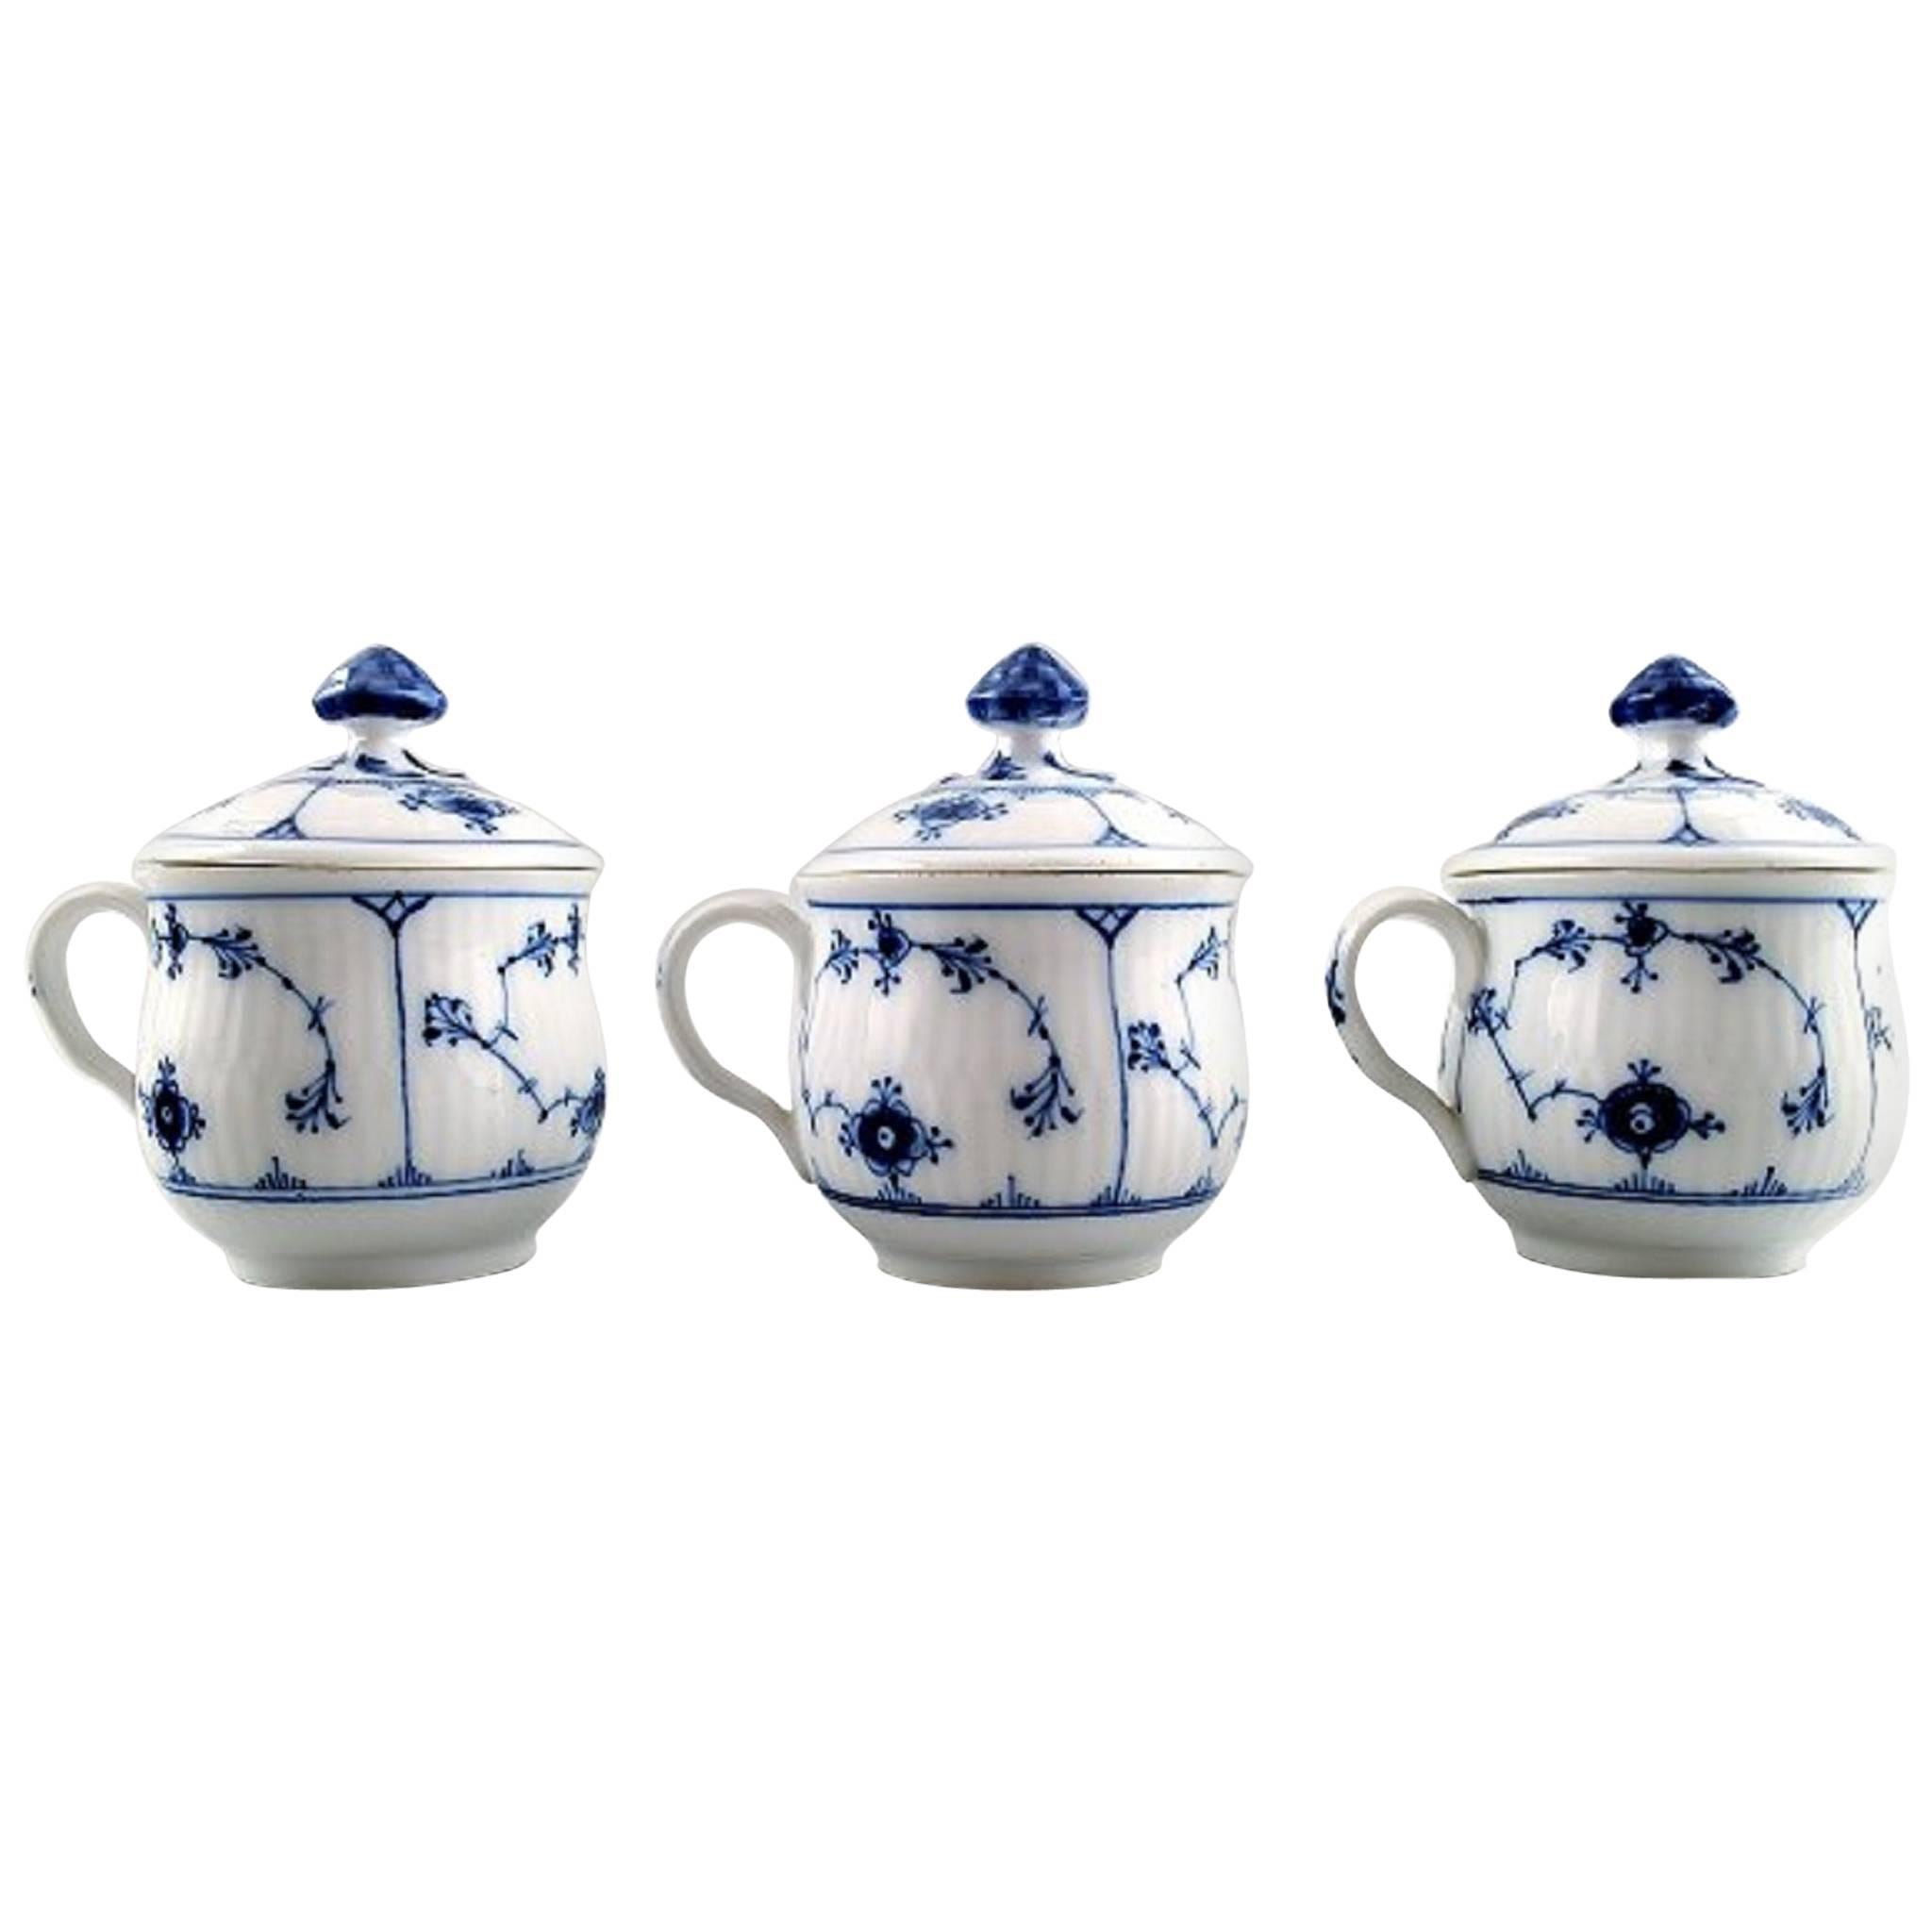 Three Antique Royal Copenhagen Blue Fluted Plain Custard/Cream Cups with Handles